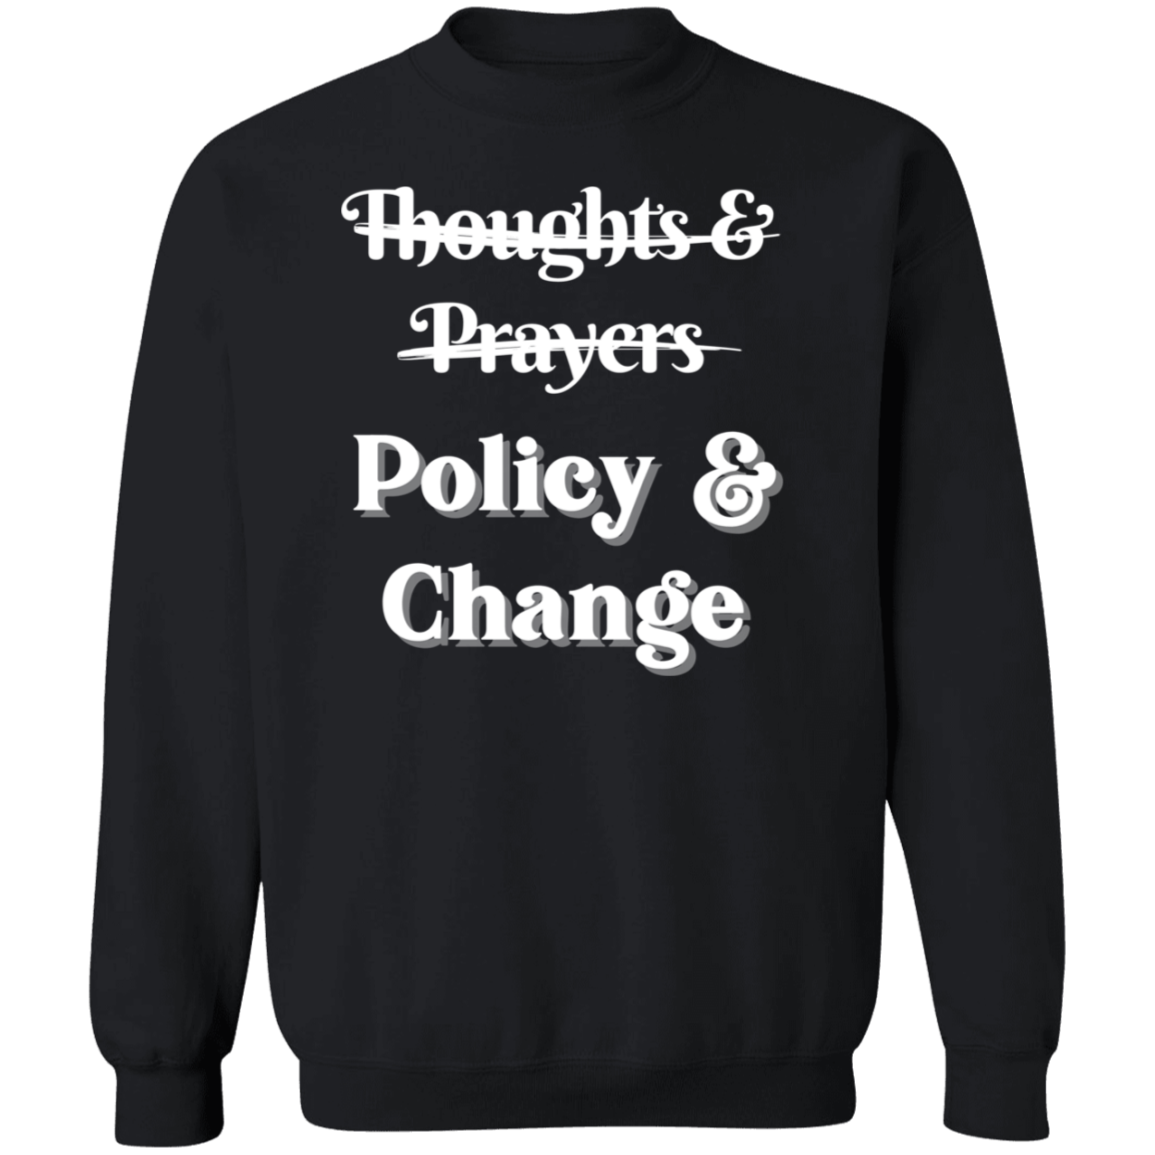 Policy & Change T-Shirt, Sweatshirt, Hoodie